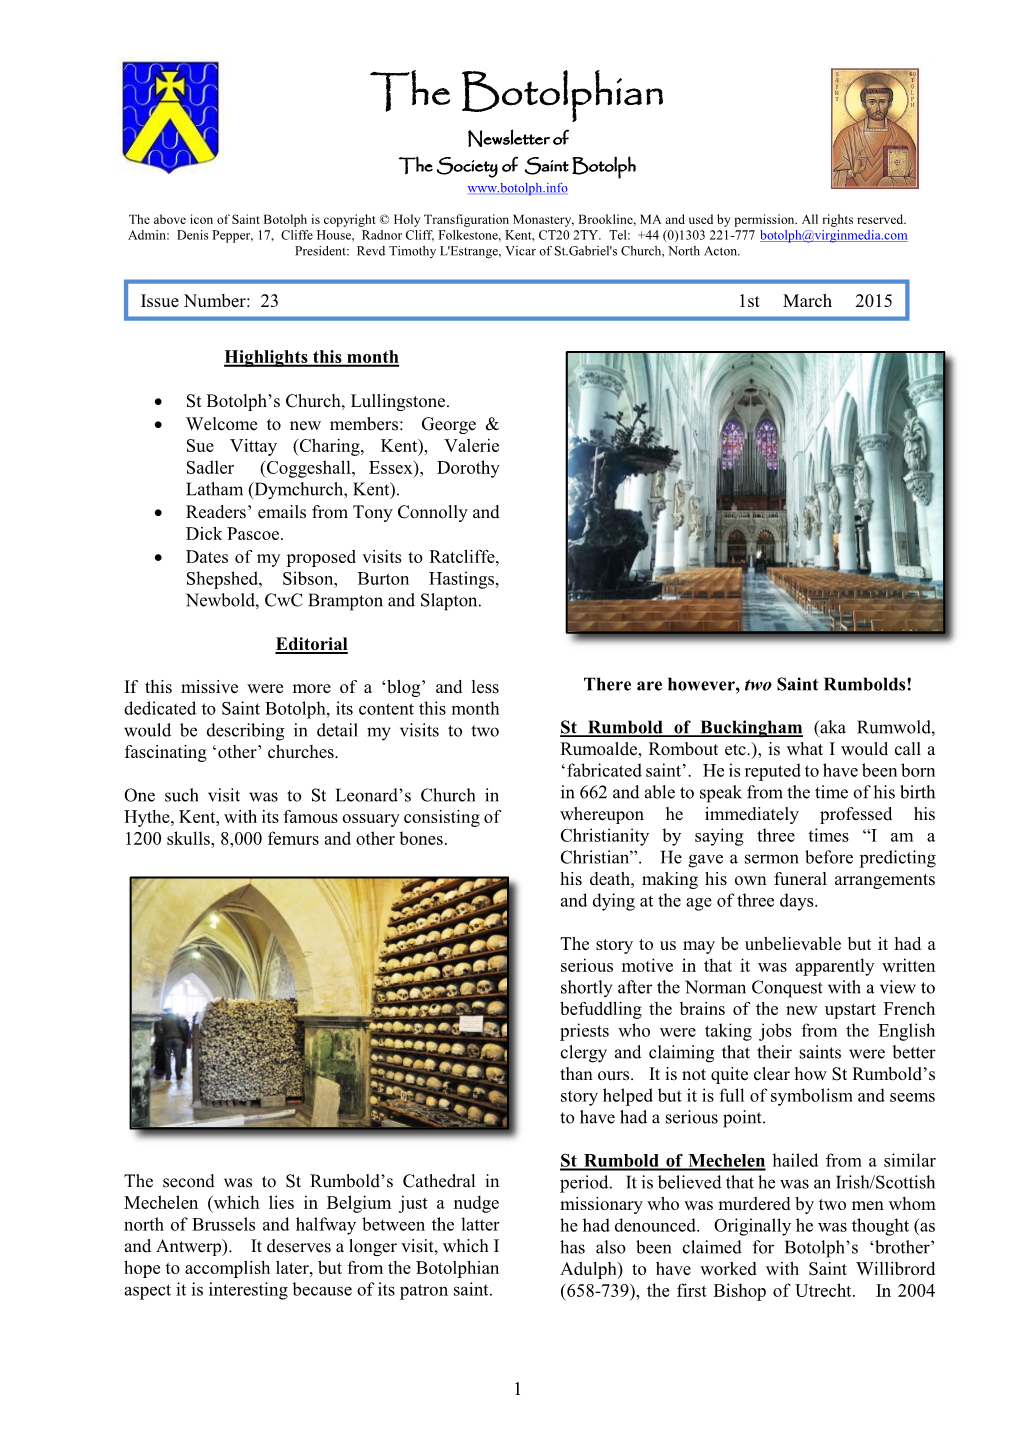 The Botolphian Newsletter of the Society of Saint Botolph